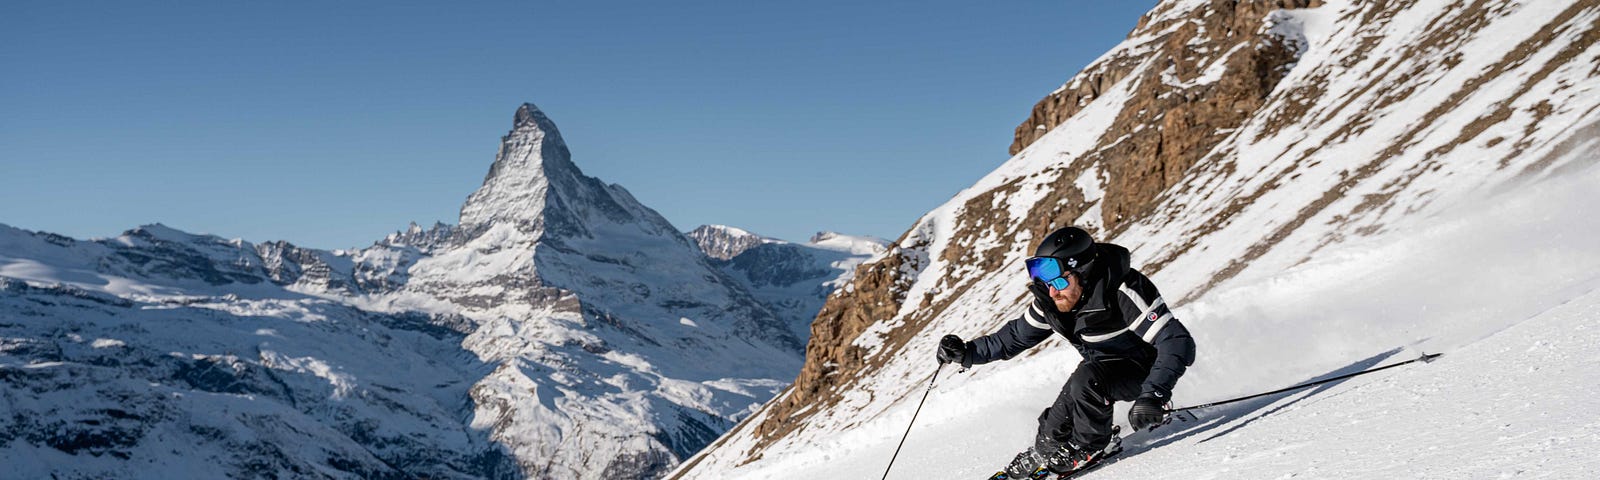 Luca Cheula skiing down a slope in Zermatt, Matterhorn in the backround.